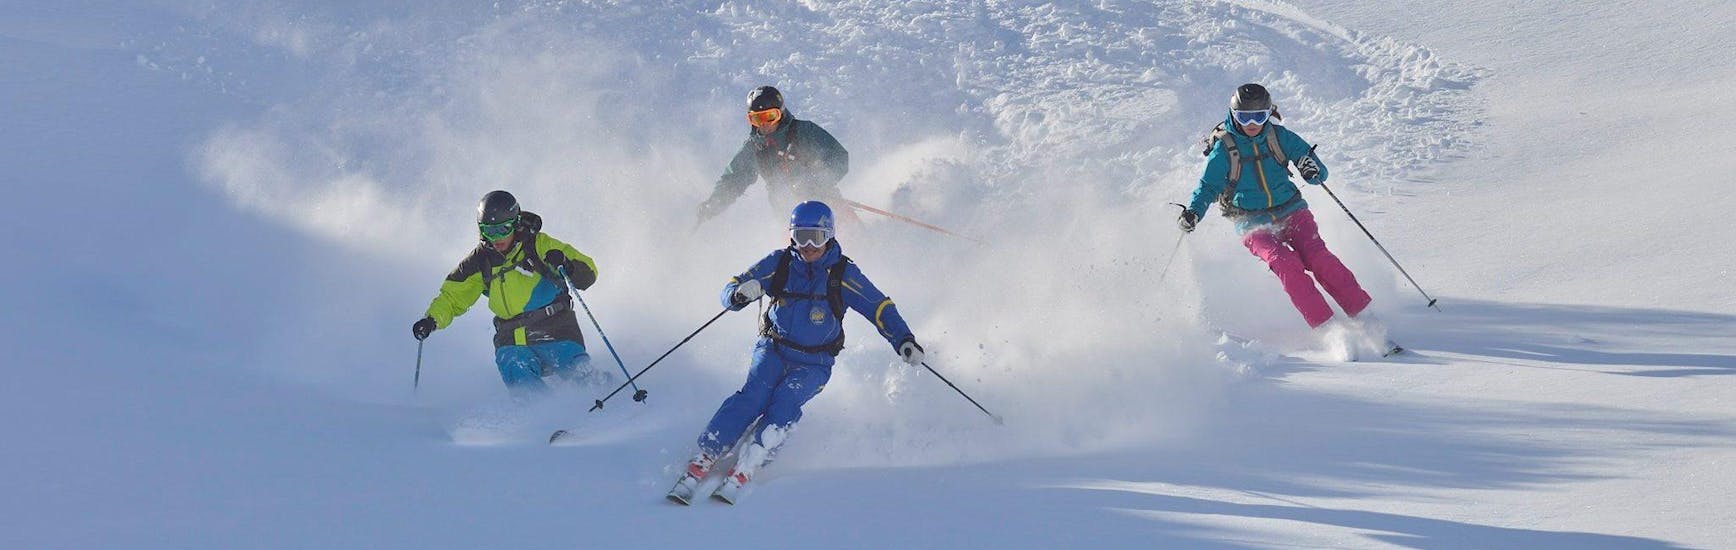 ski-courses-adults-all-levels-hero